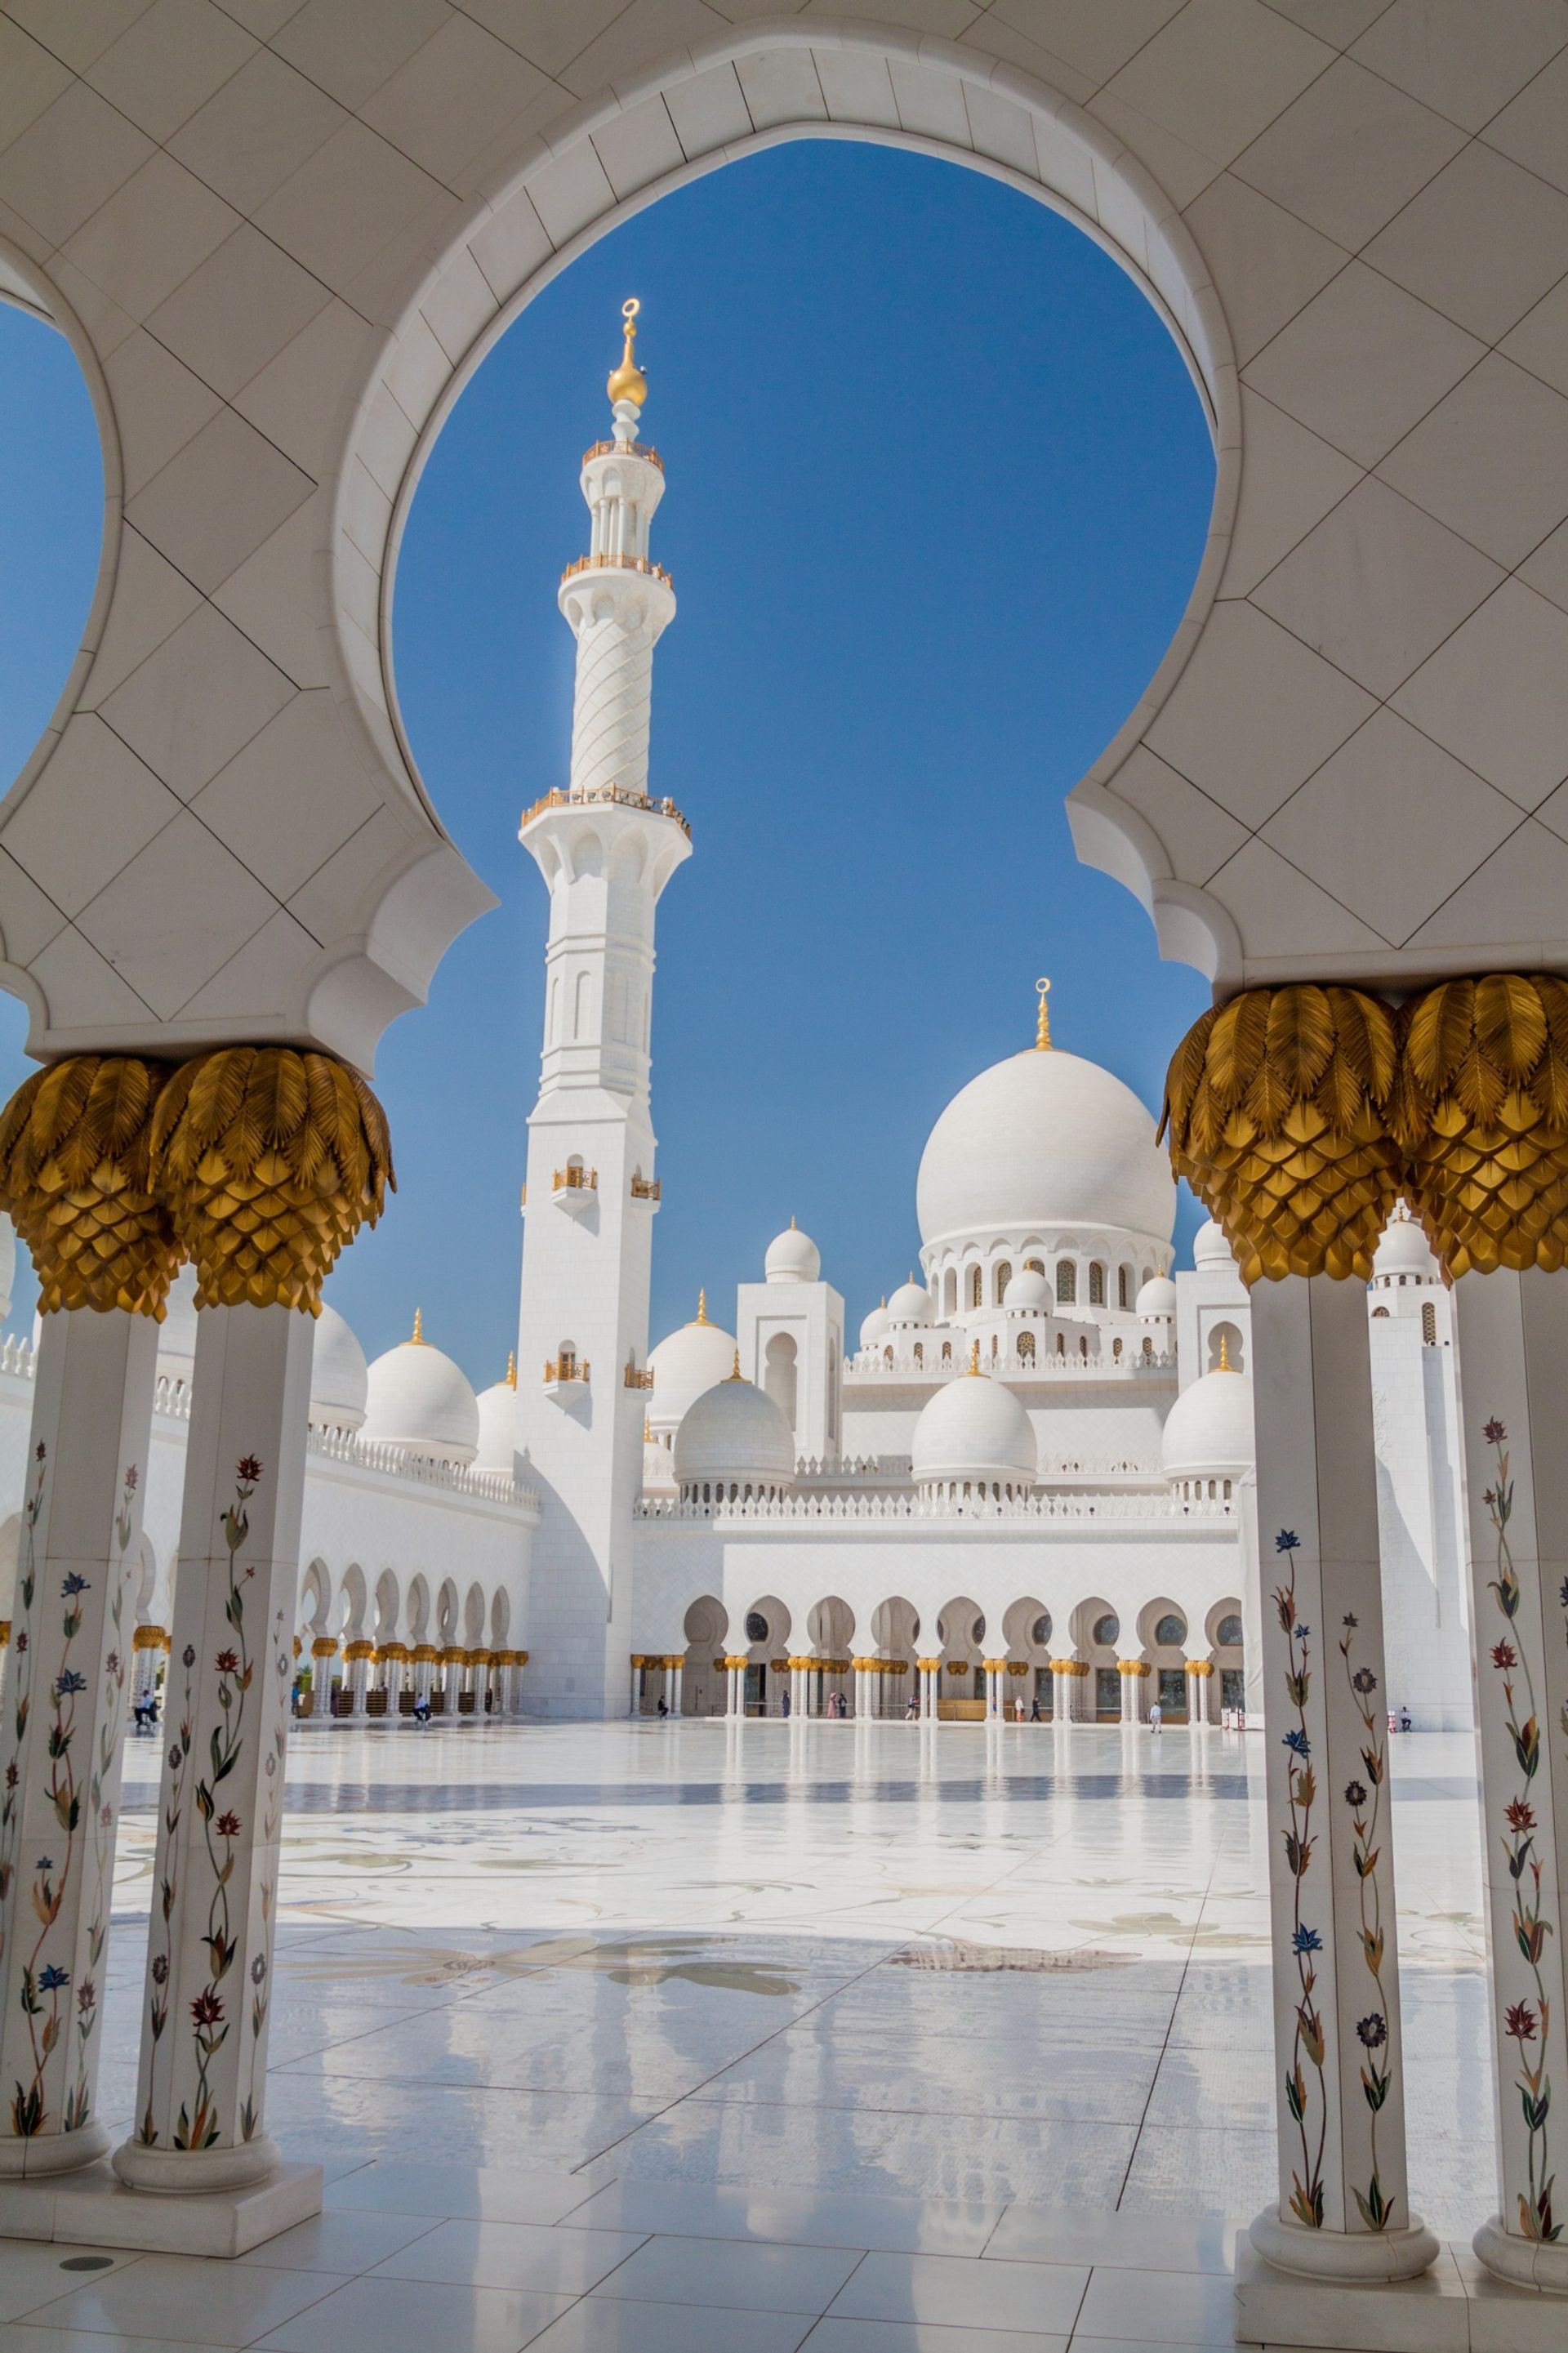 Courtyard of Sheikh Zayed Grand Mosque in Abu Dhabi, United Arab Emirates